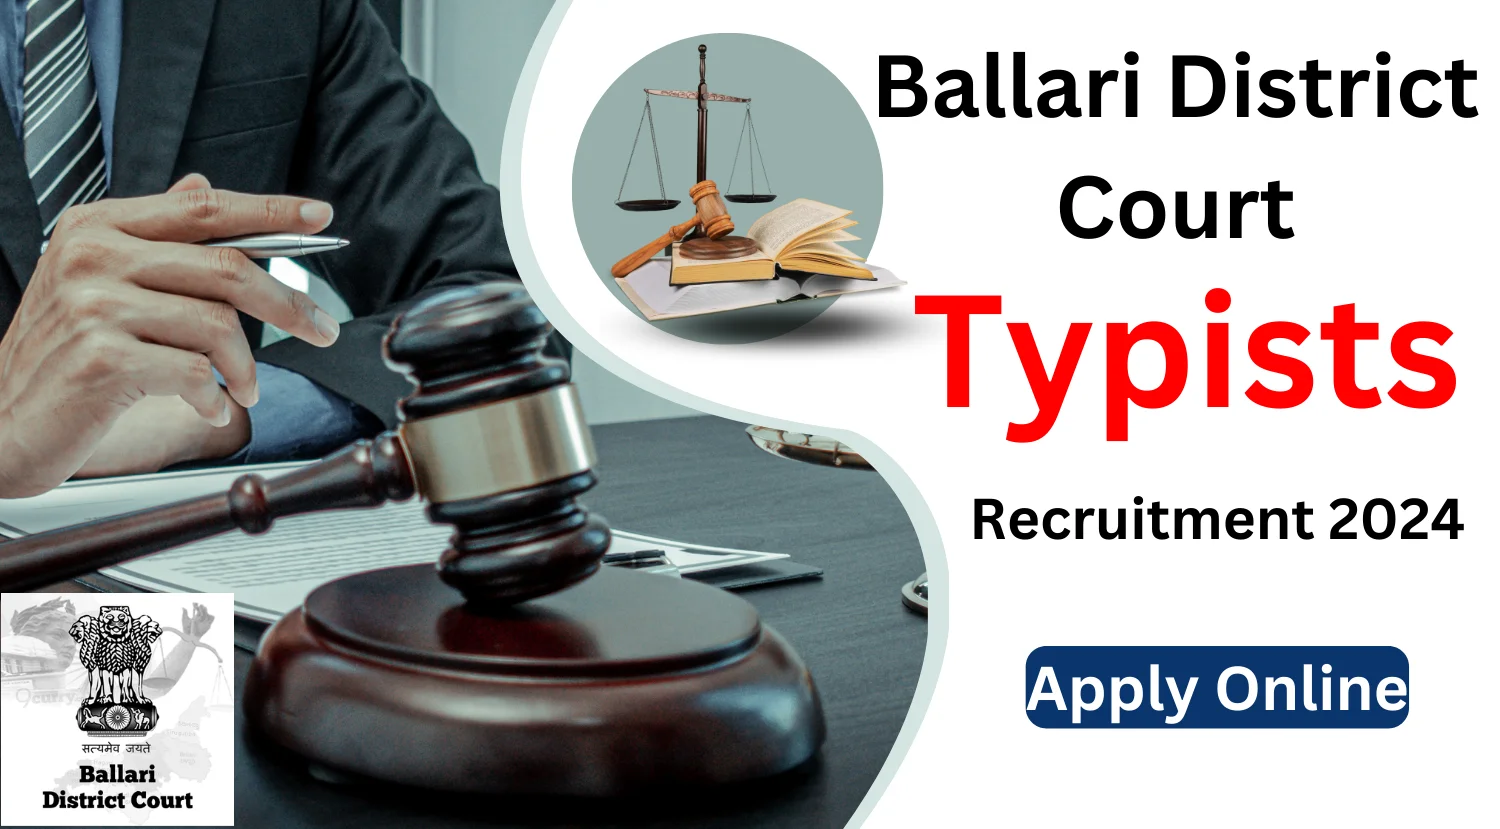 Ballari District Court Recruitment 2024